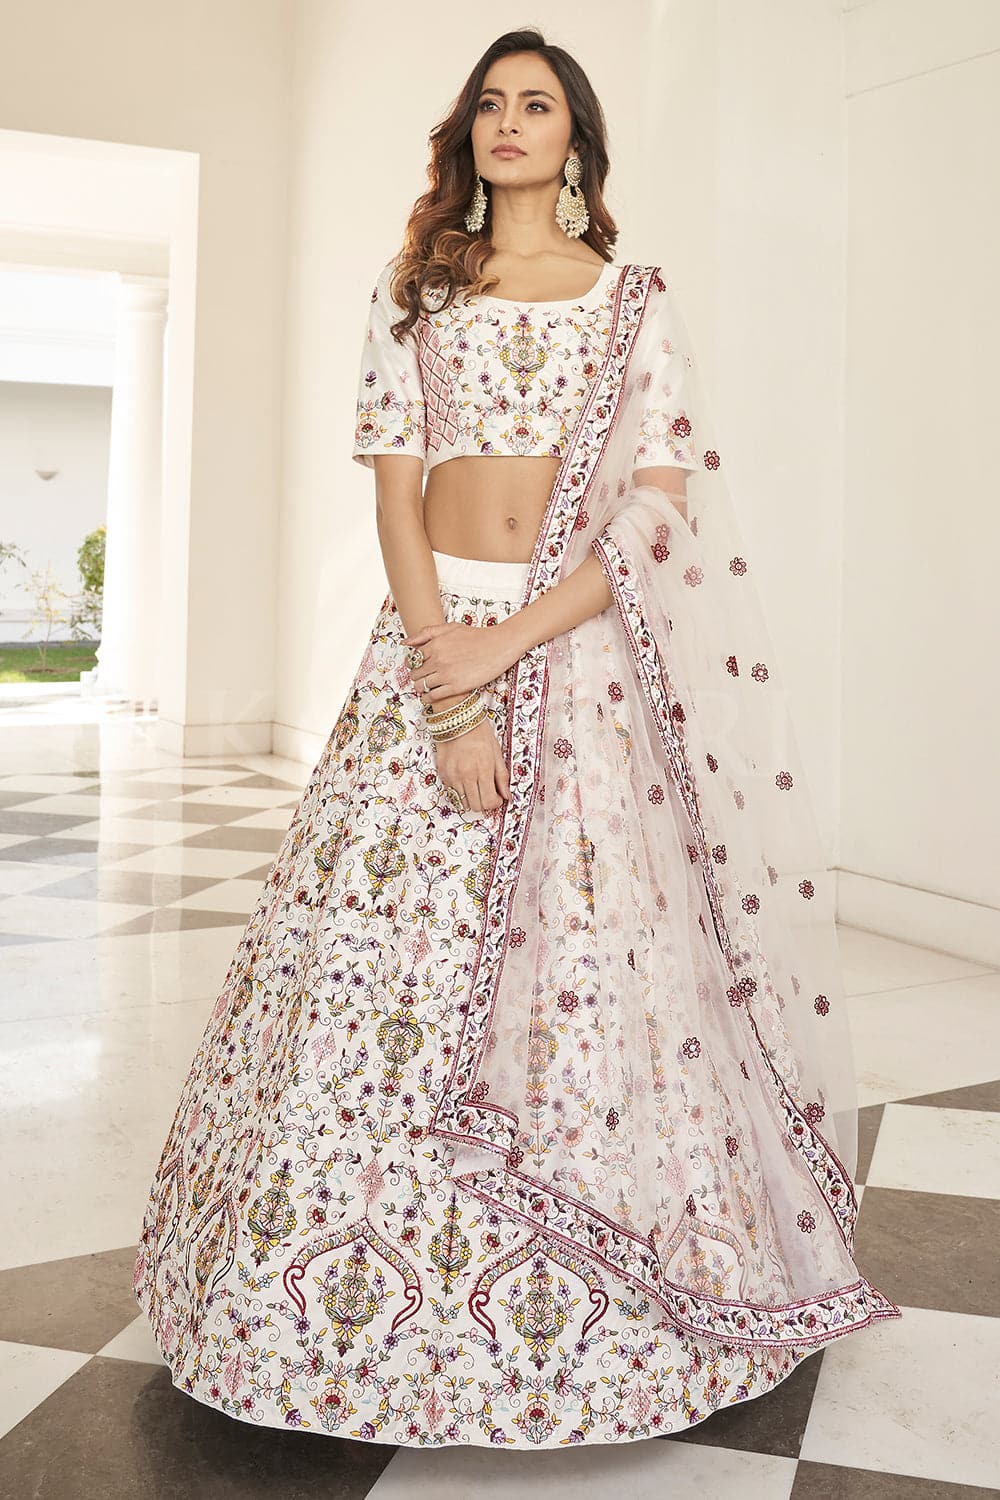 Ileana D'Cruz White Bollywood Style Lehenga Saree - jomso - 624722